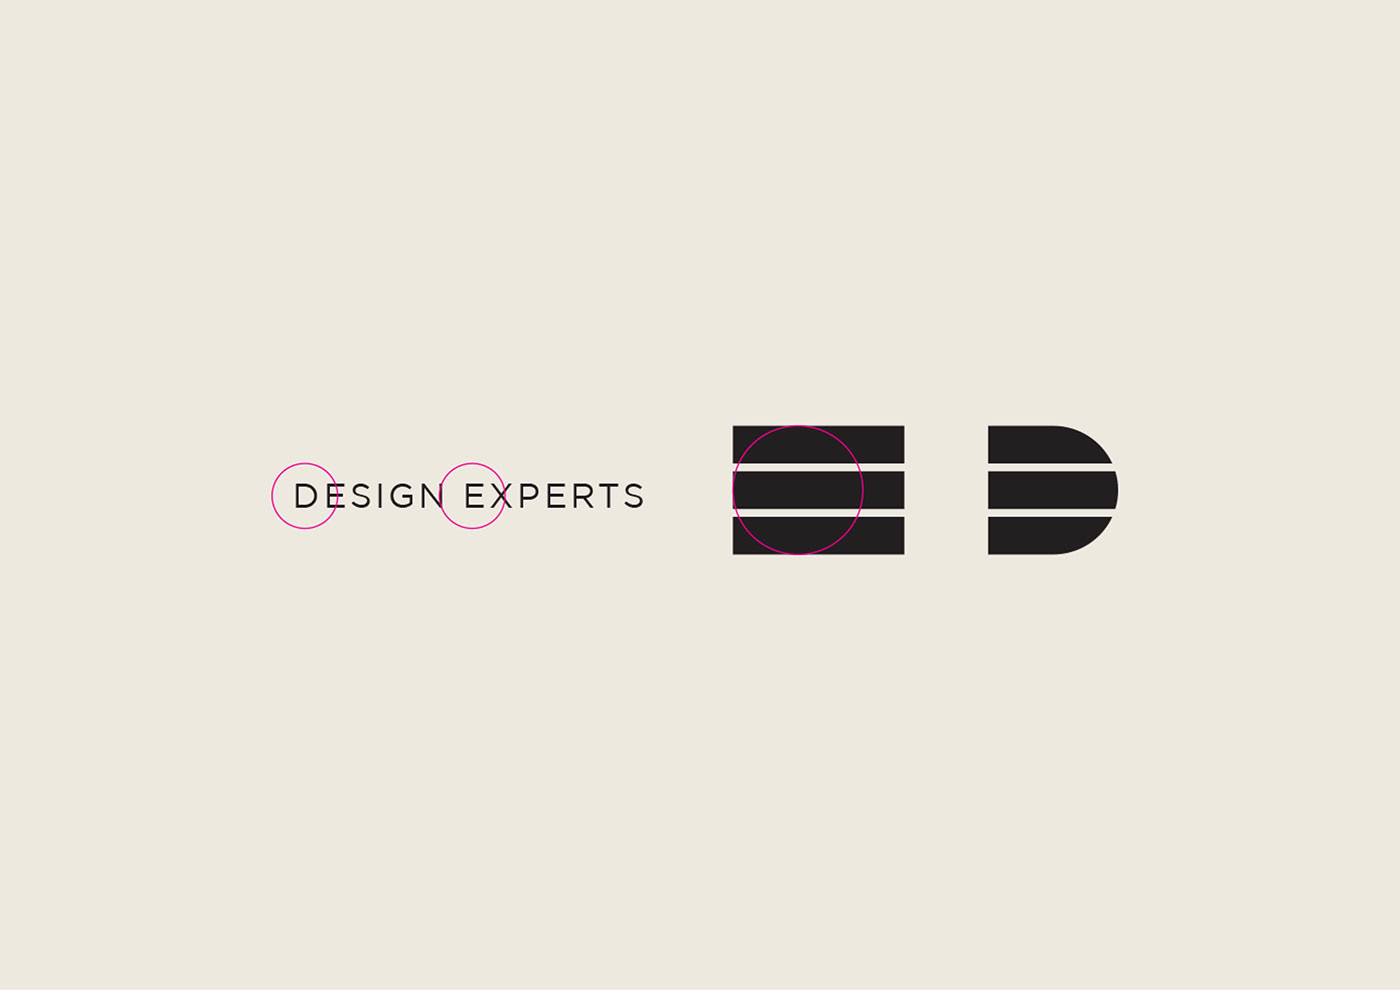 architects de design experts graphics Interior